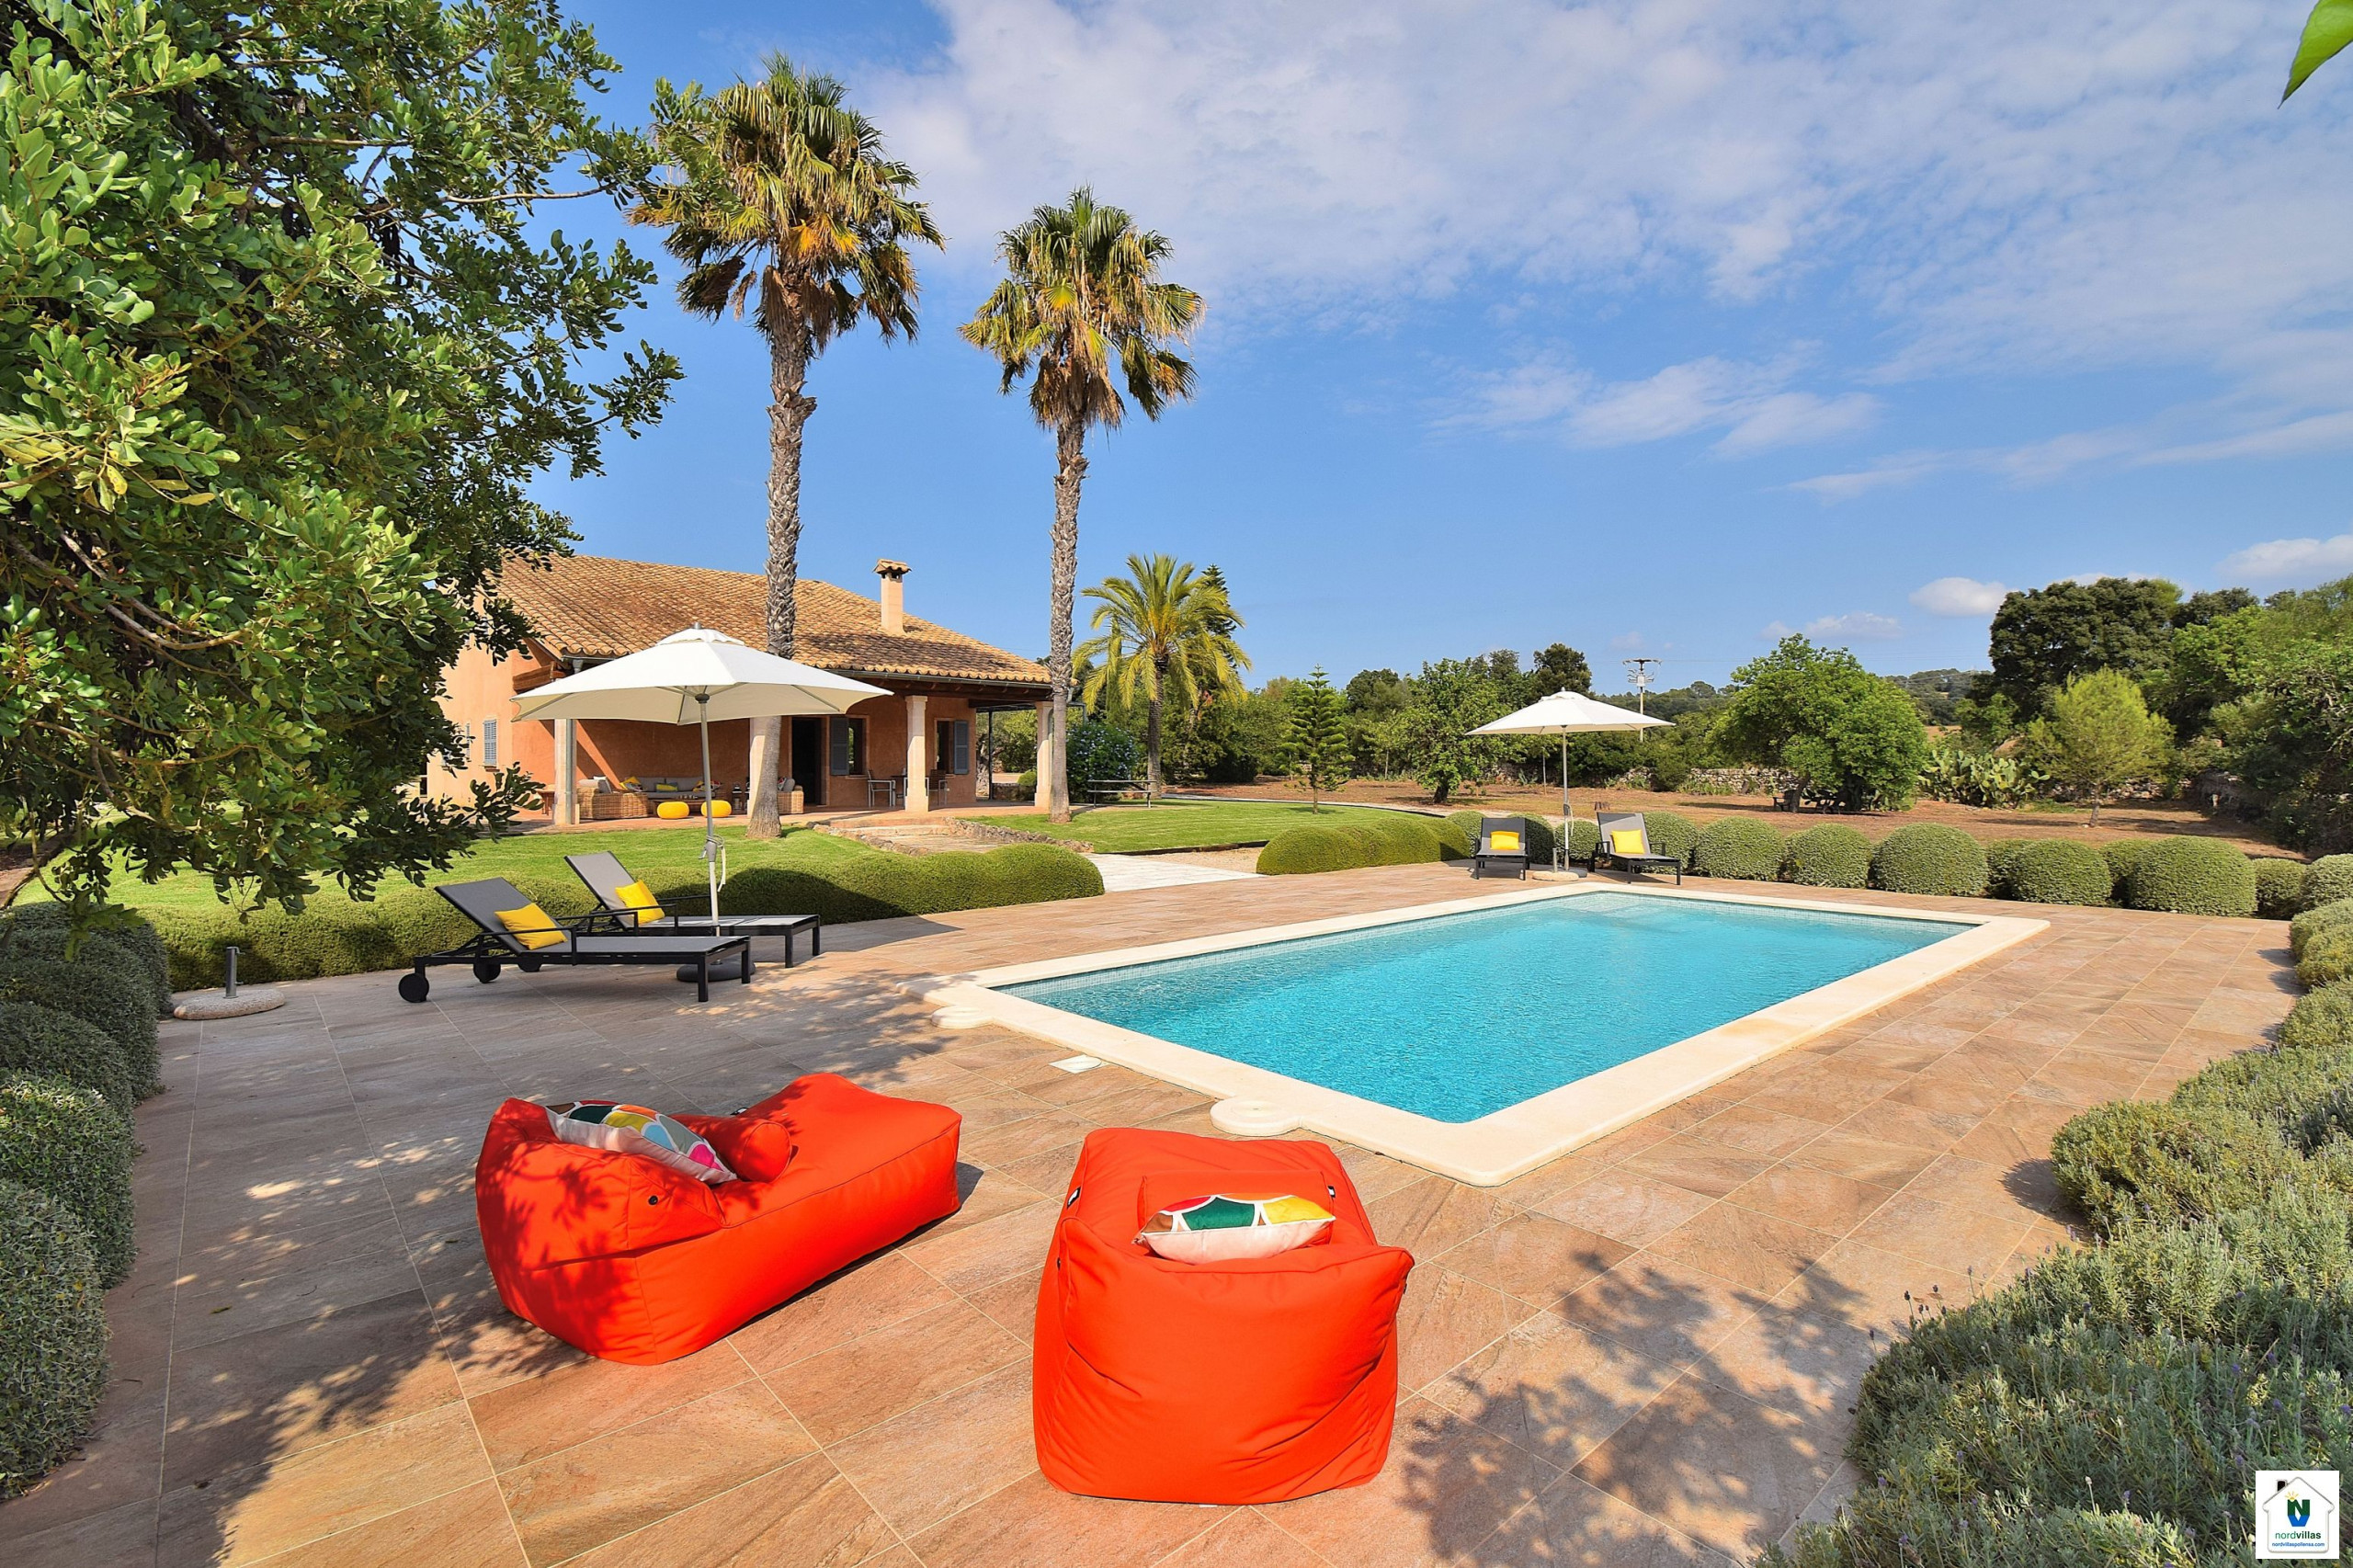 Holiday house, garden, swimming pool, sunbeds, holidays, Majorca